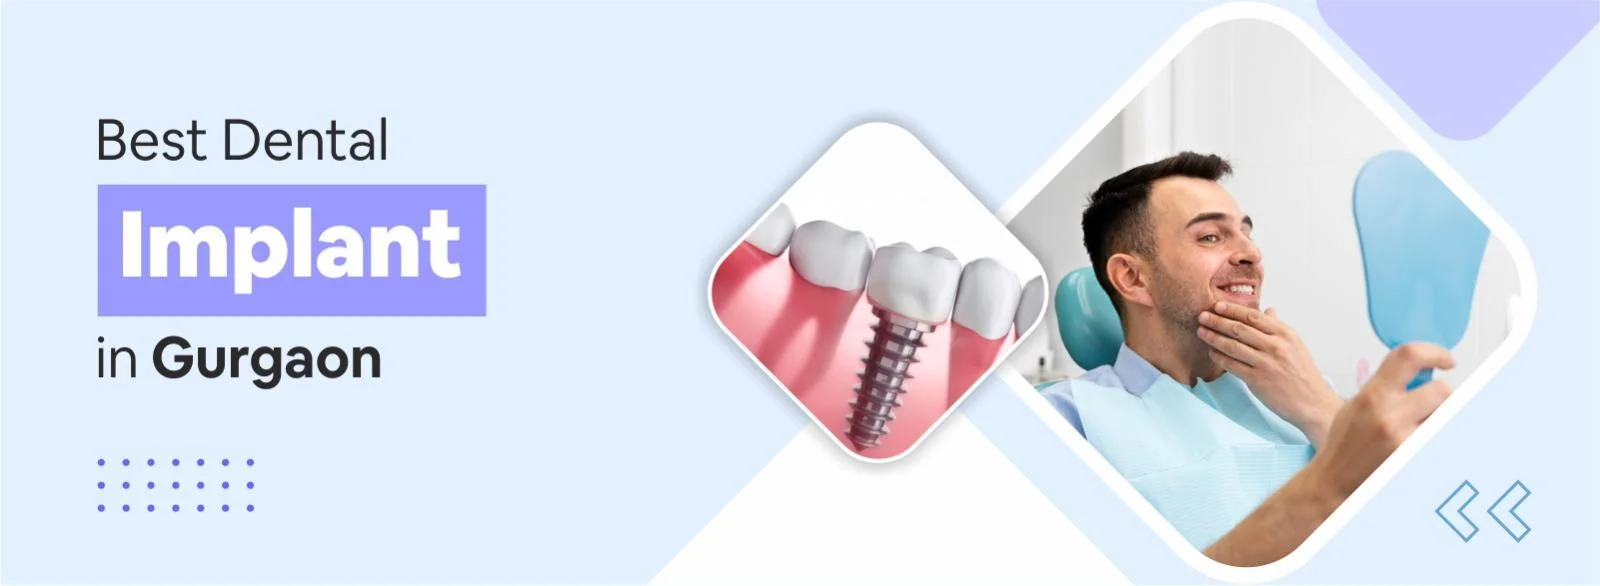 Best Dental Implant Treatment in Gurgaon